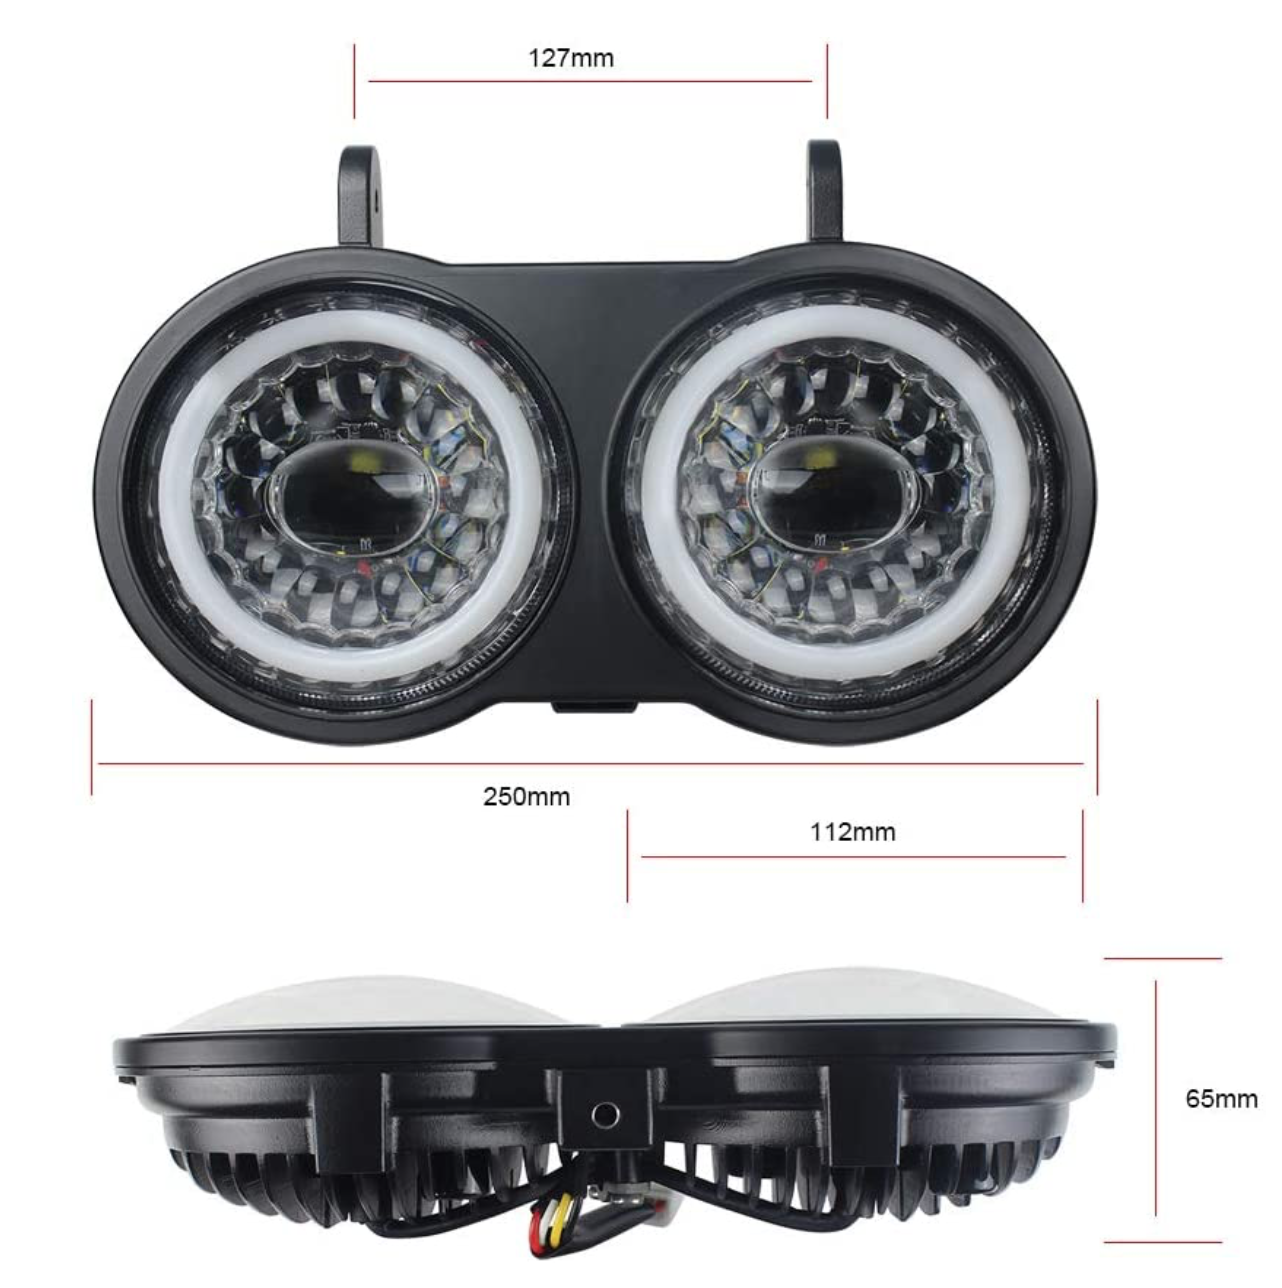 XB LED headlight dimensions